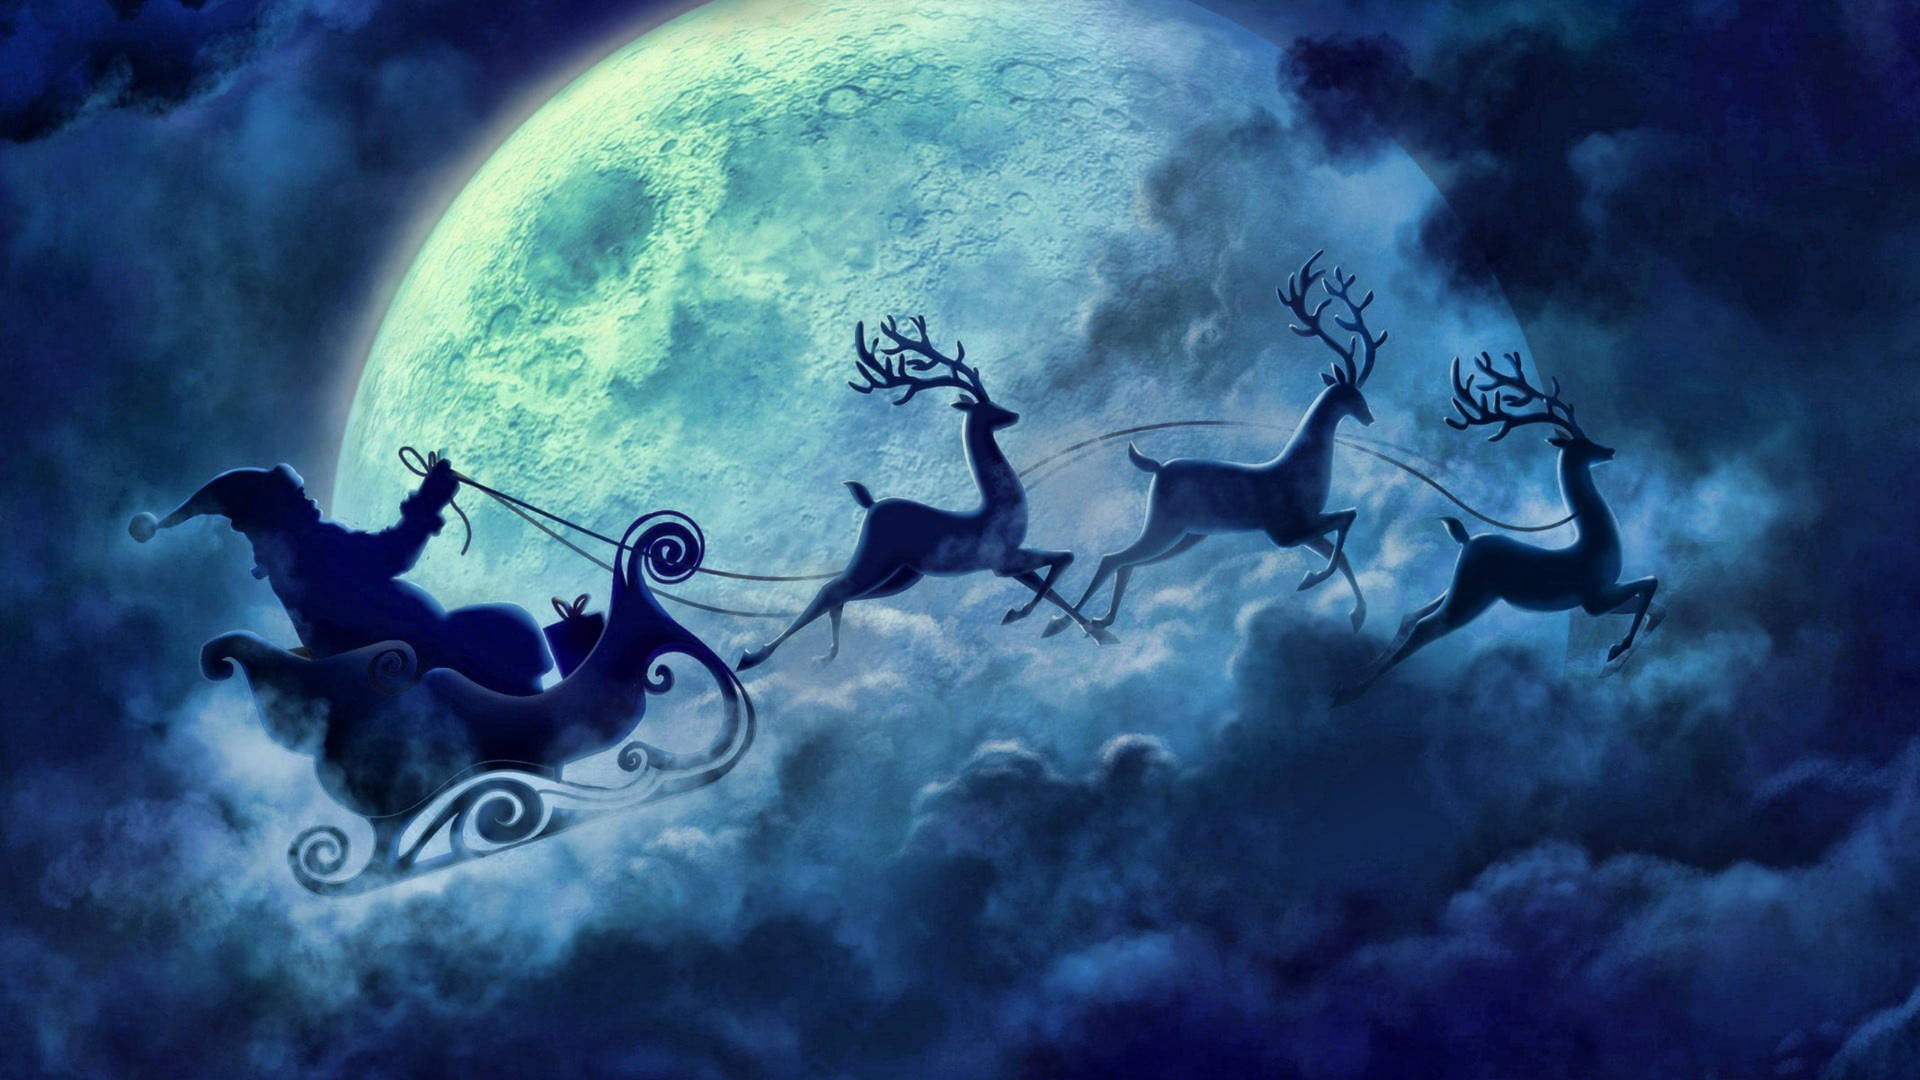 Top 999+ Reindeer Wallpapers Full HD, 4K✅Free to Use